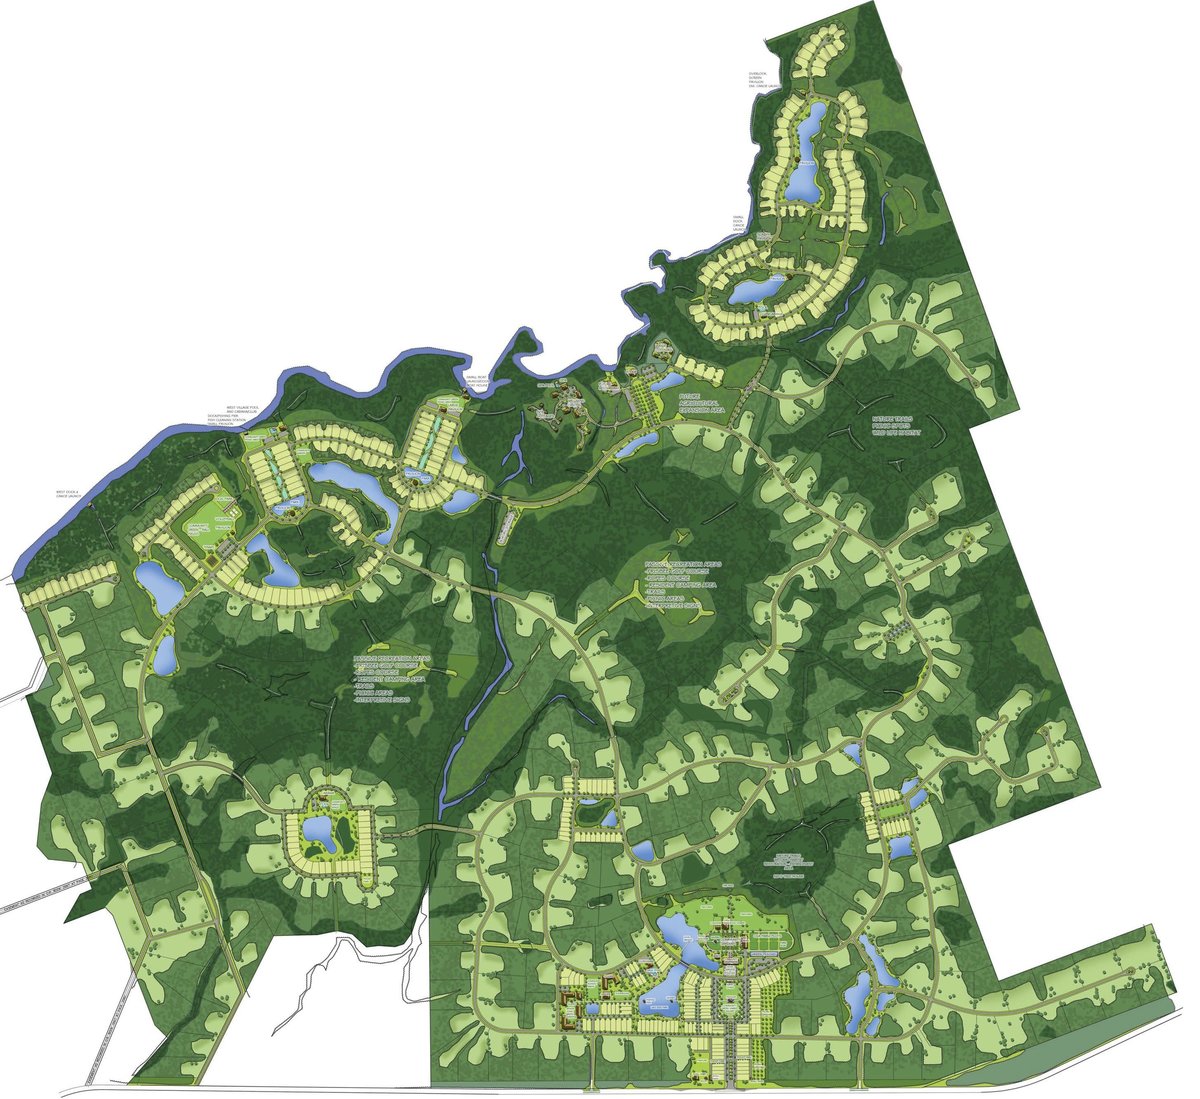 Longleaf Preserve Master Plan 2400 acres in the Florida Panhandle 2010